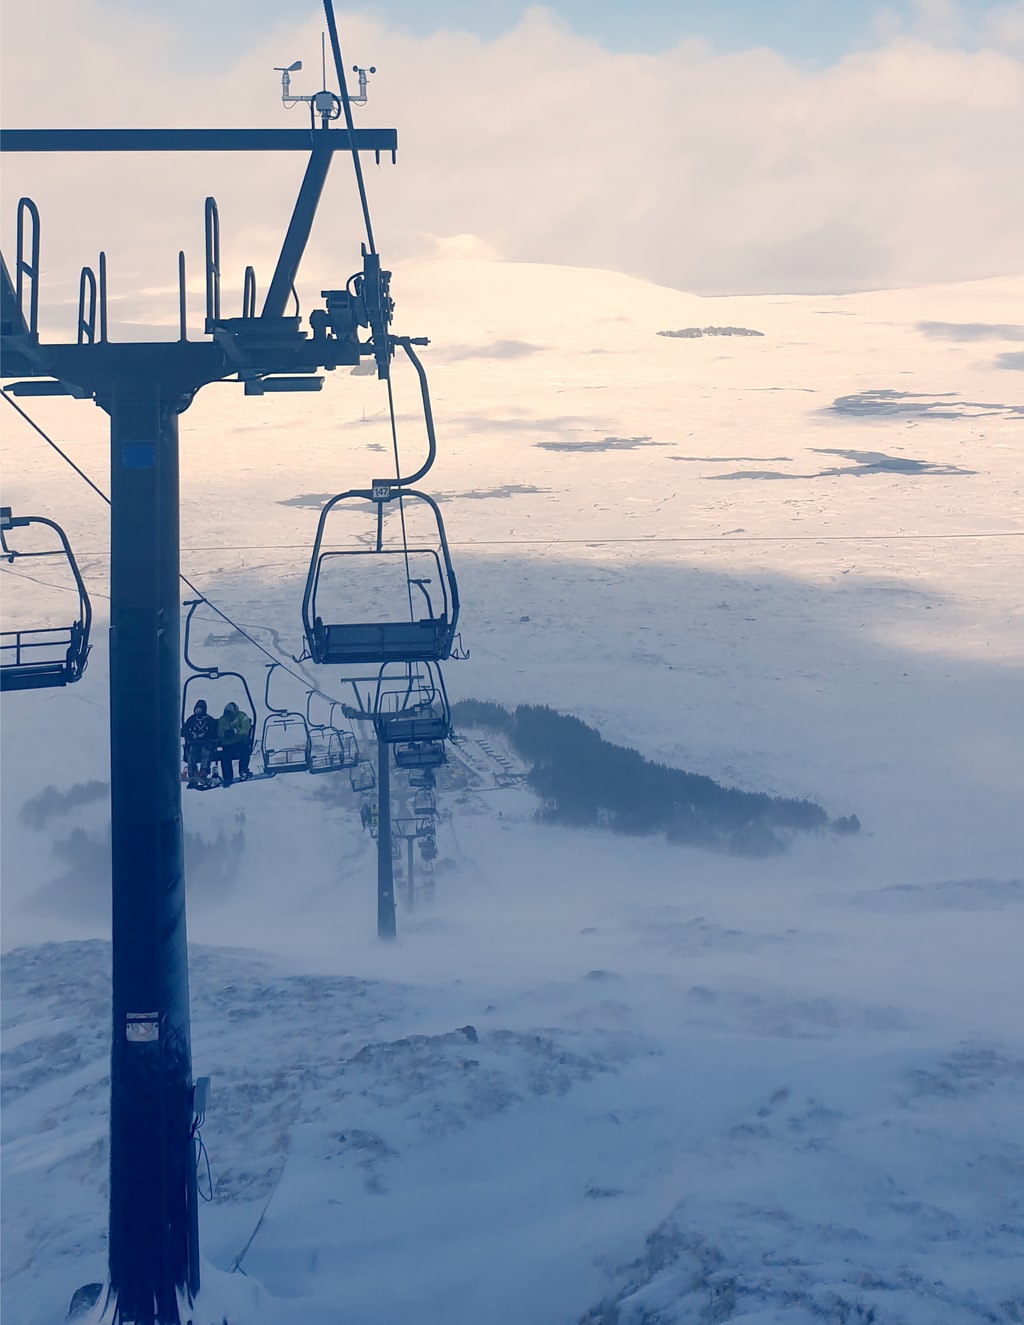 Chairlift to the Mountain in Glencoe Ski Resort in Scotland